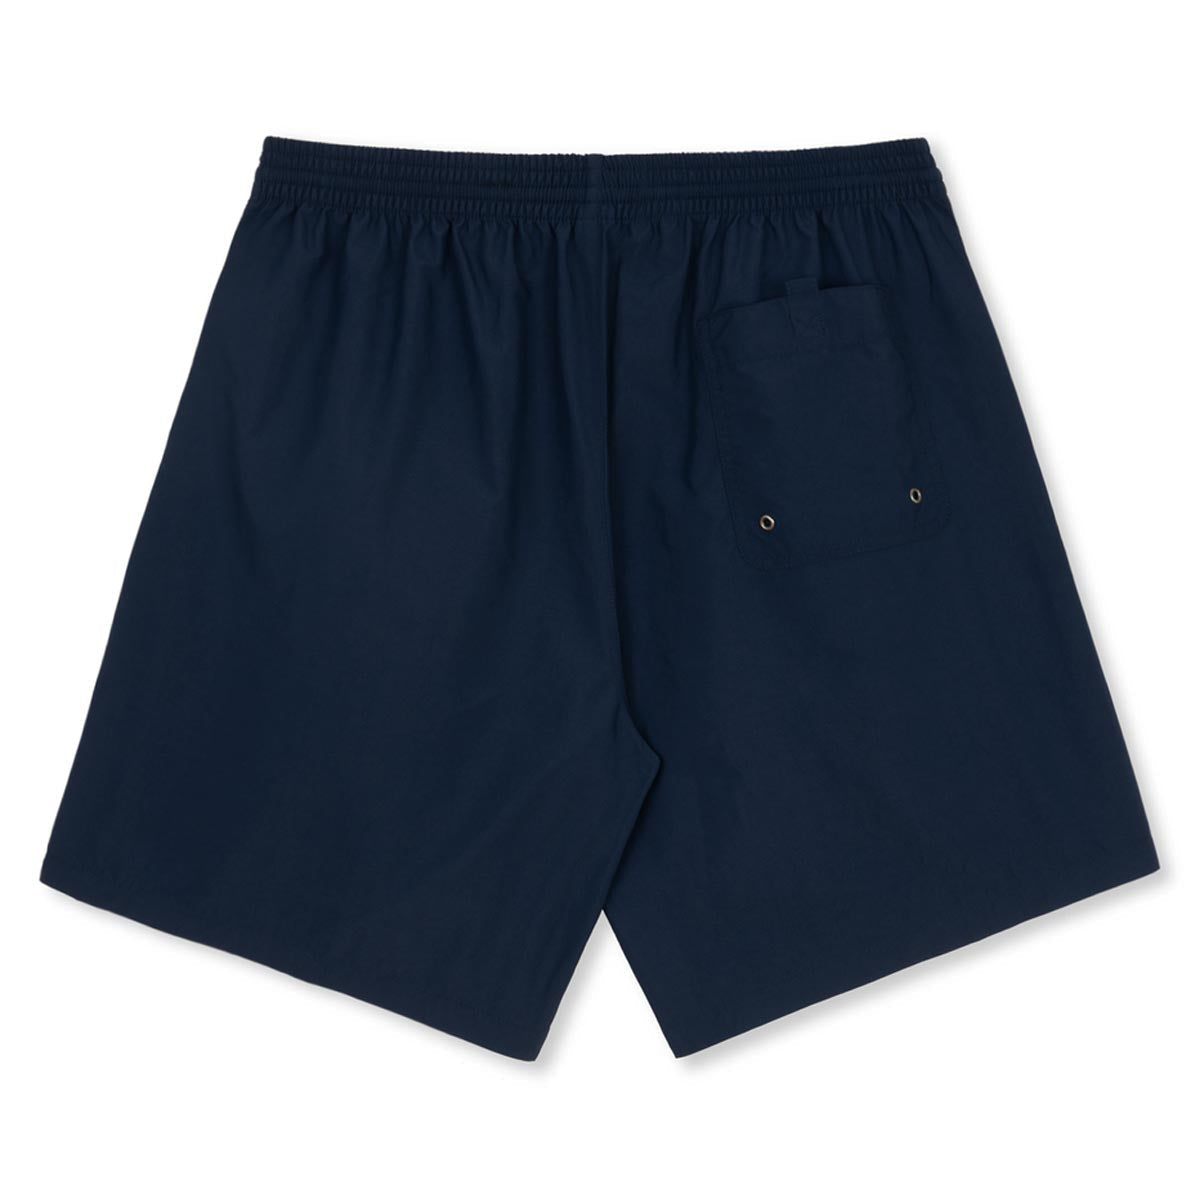 Polar Swim Square Stripe Shorts - Navy/Orange image 2